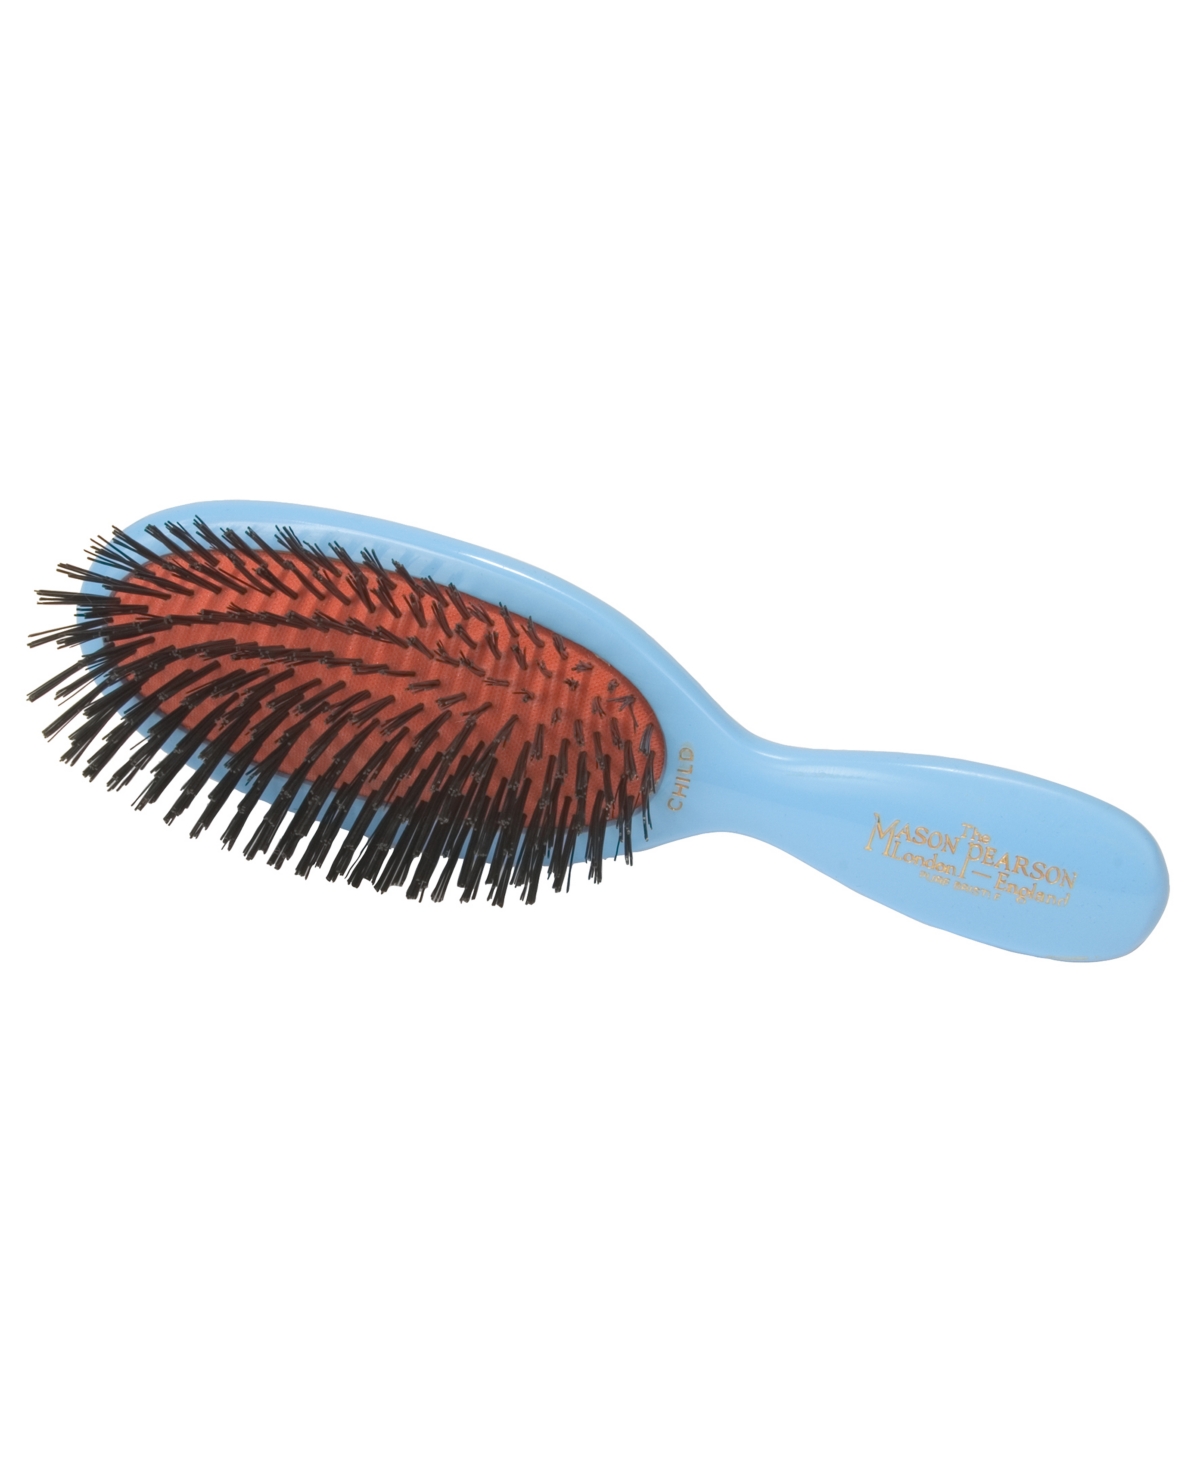 Childs Sensitive Bristle Hair Brush